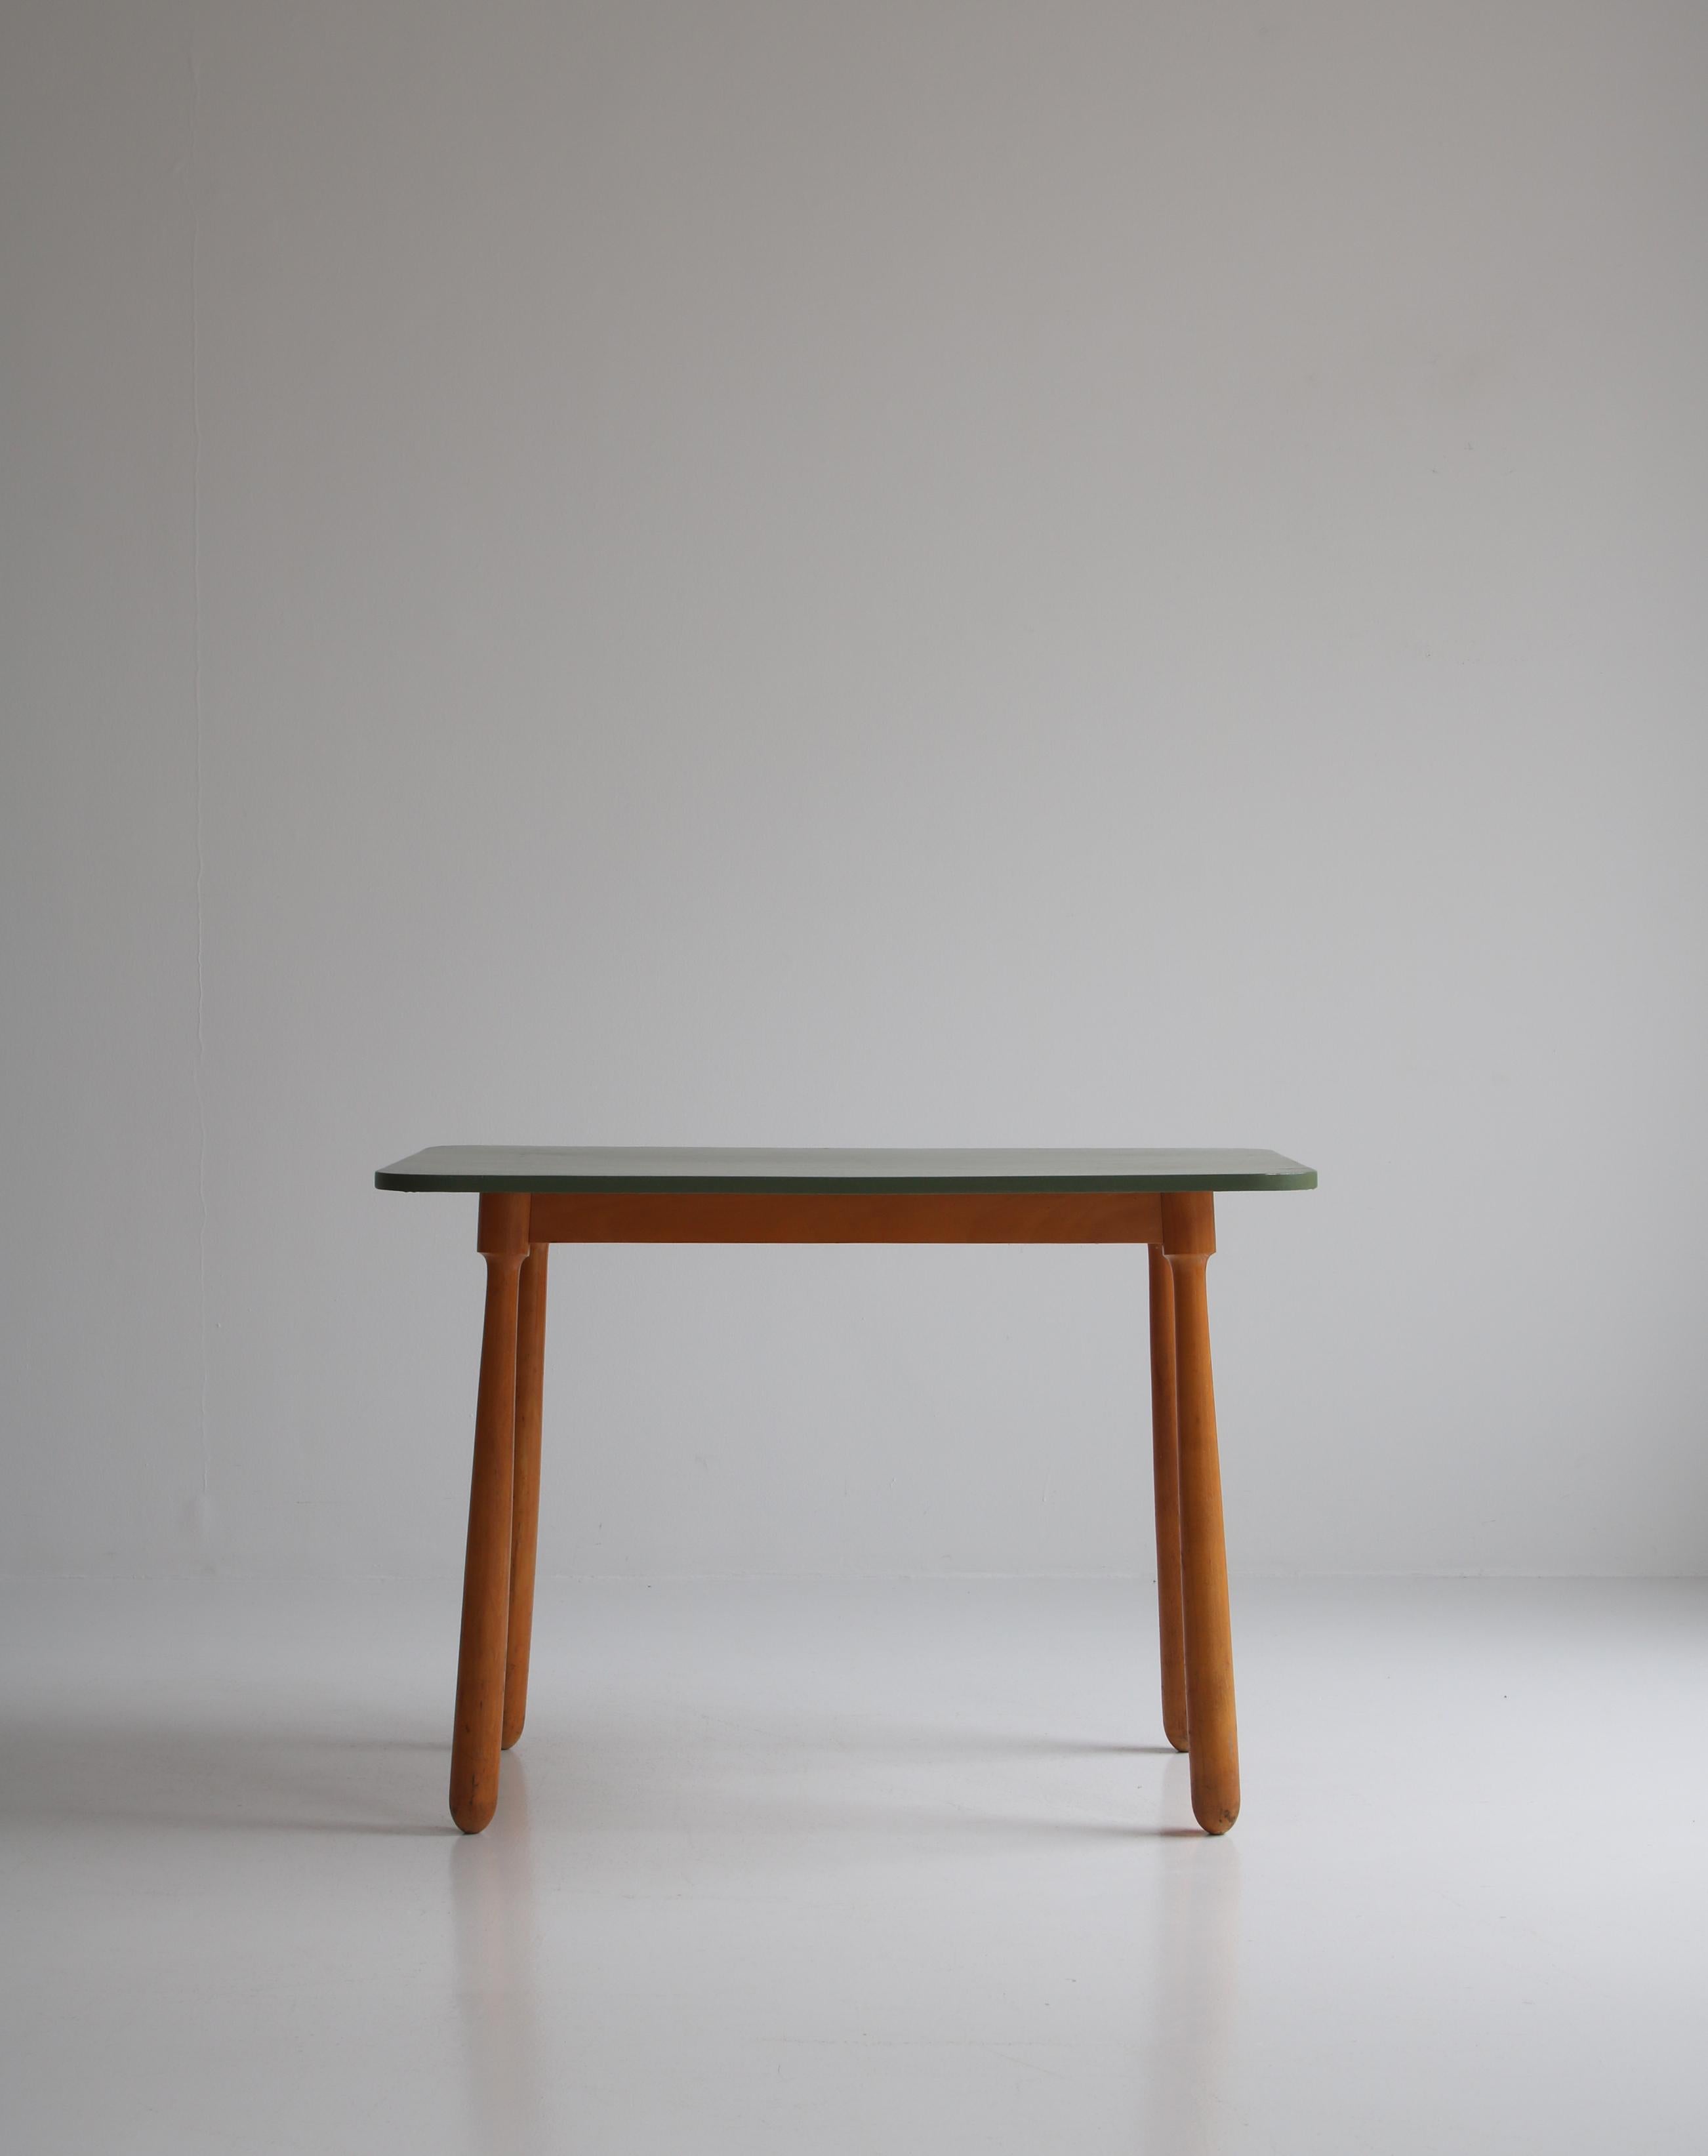 Arnold Madsen Club Legged Desk / Table in Beech, Scandinavian Modern, 1940s For Sale 5